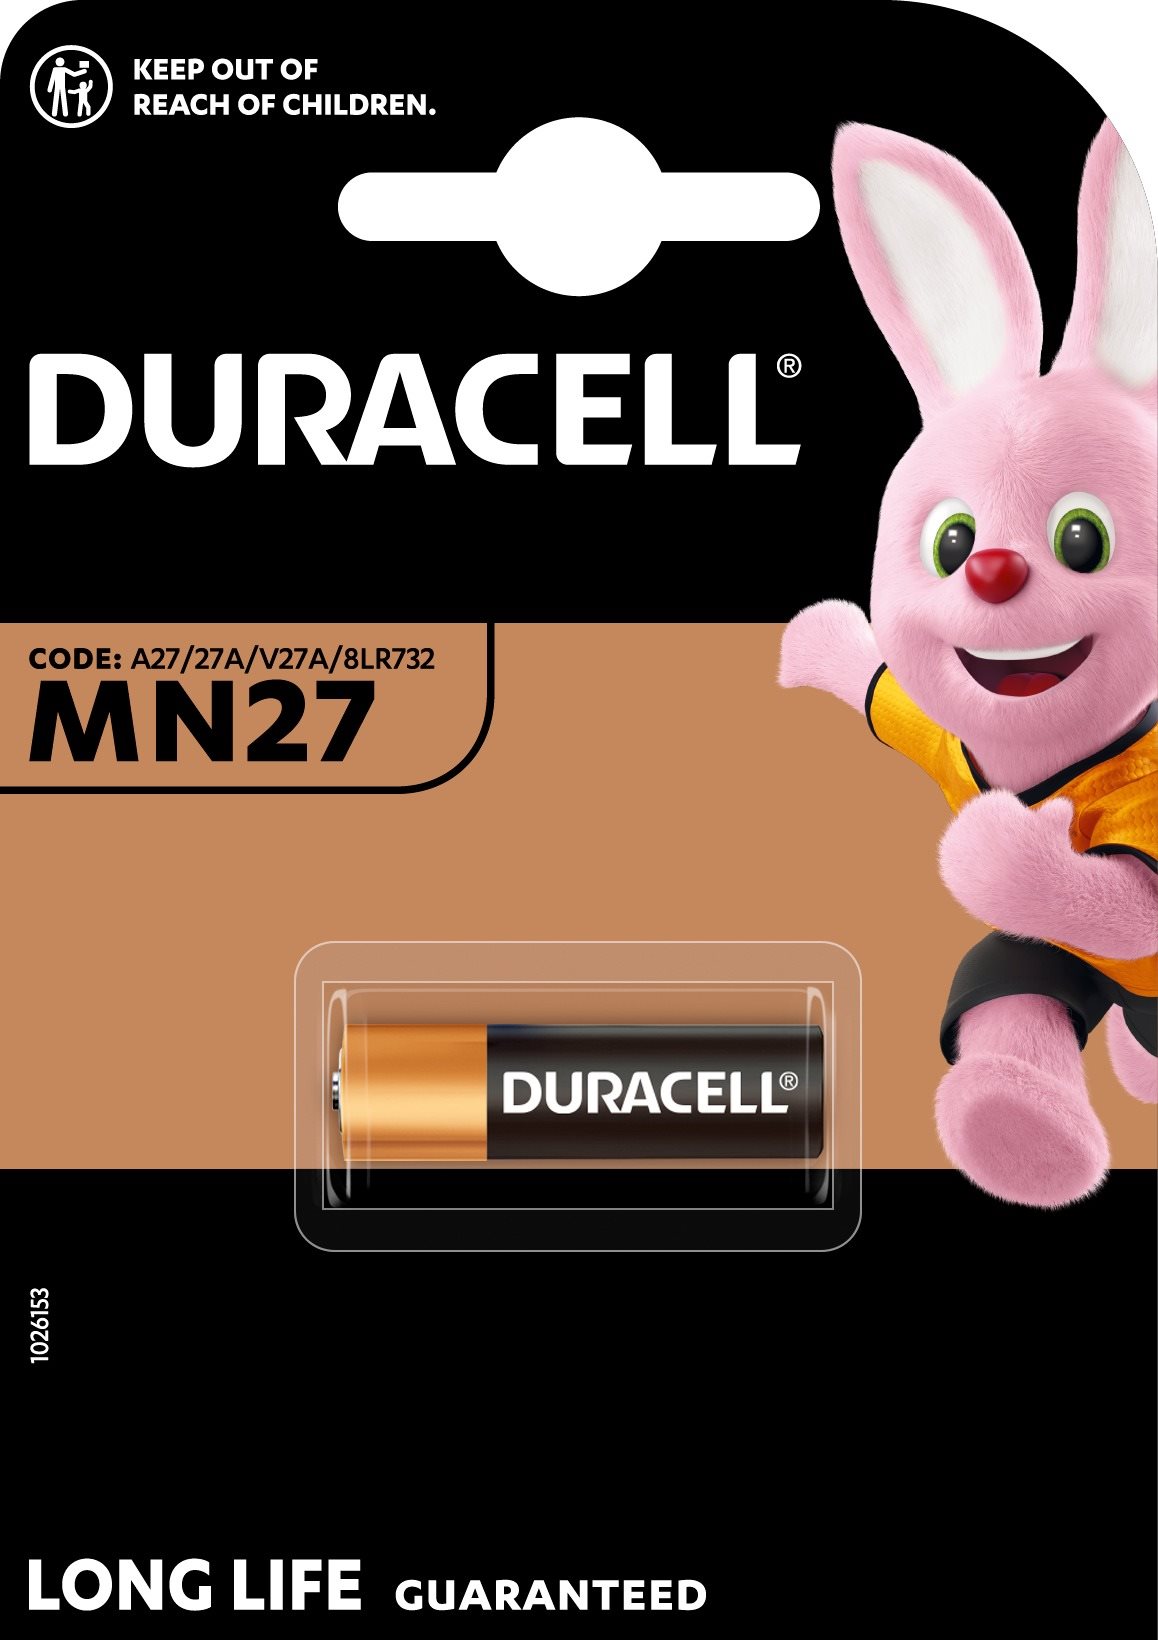 Duracell MN27 B1